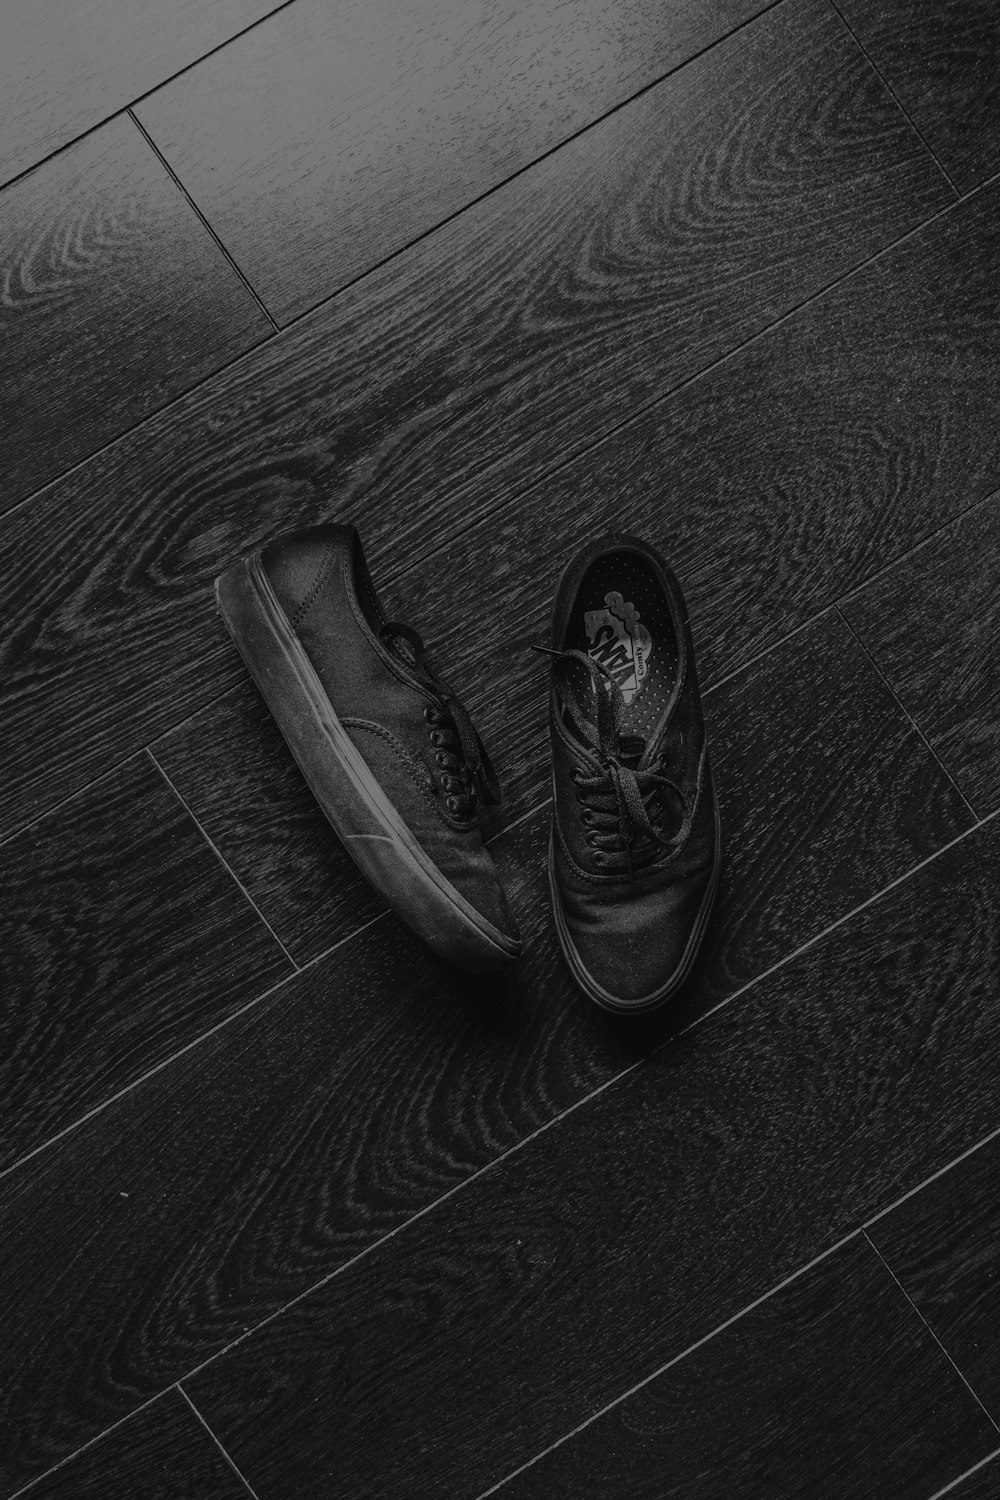 black leather shoes on black wooden floor